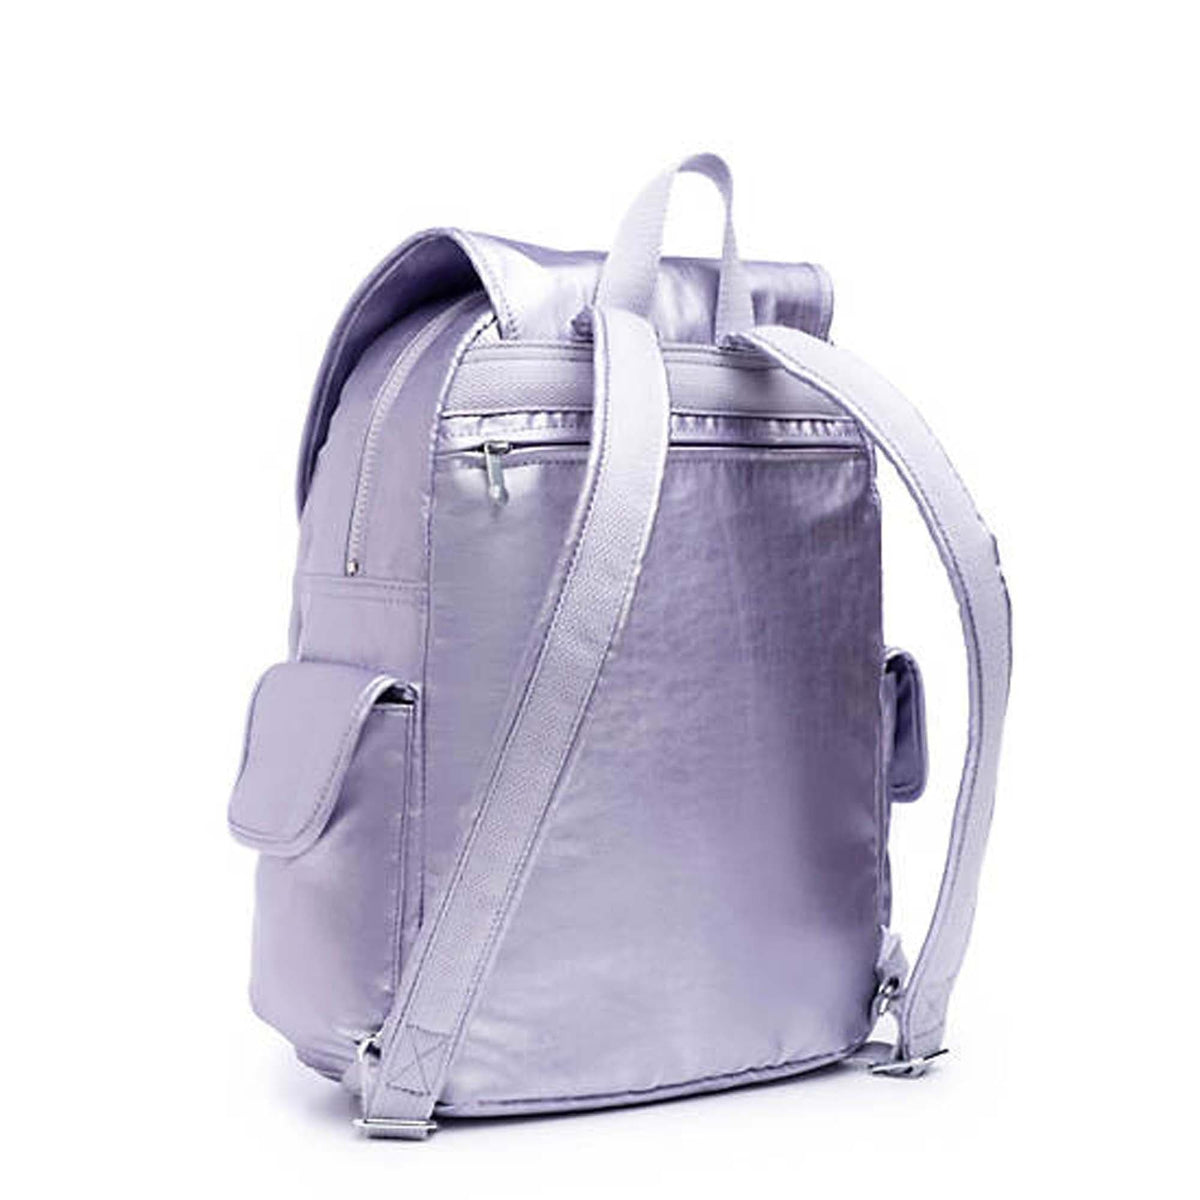 Kipling City Pack Medium Metallic Backpack